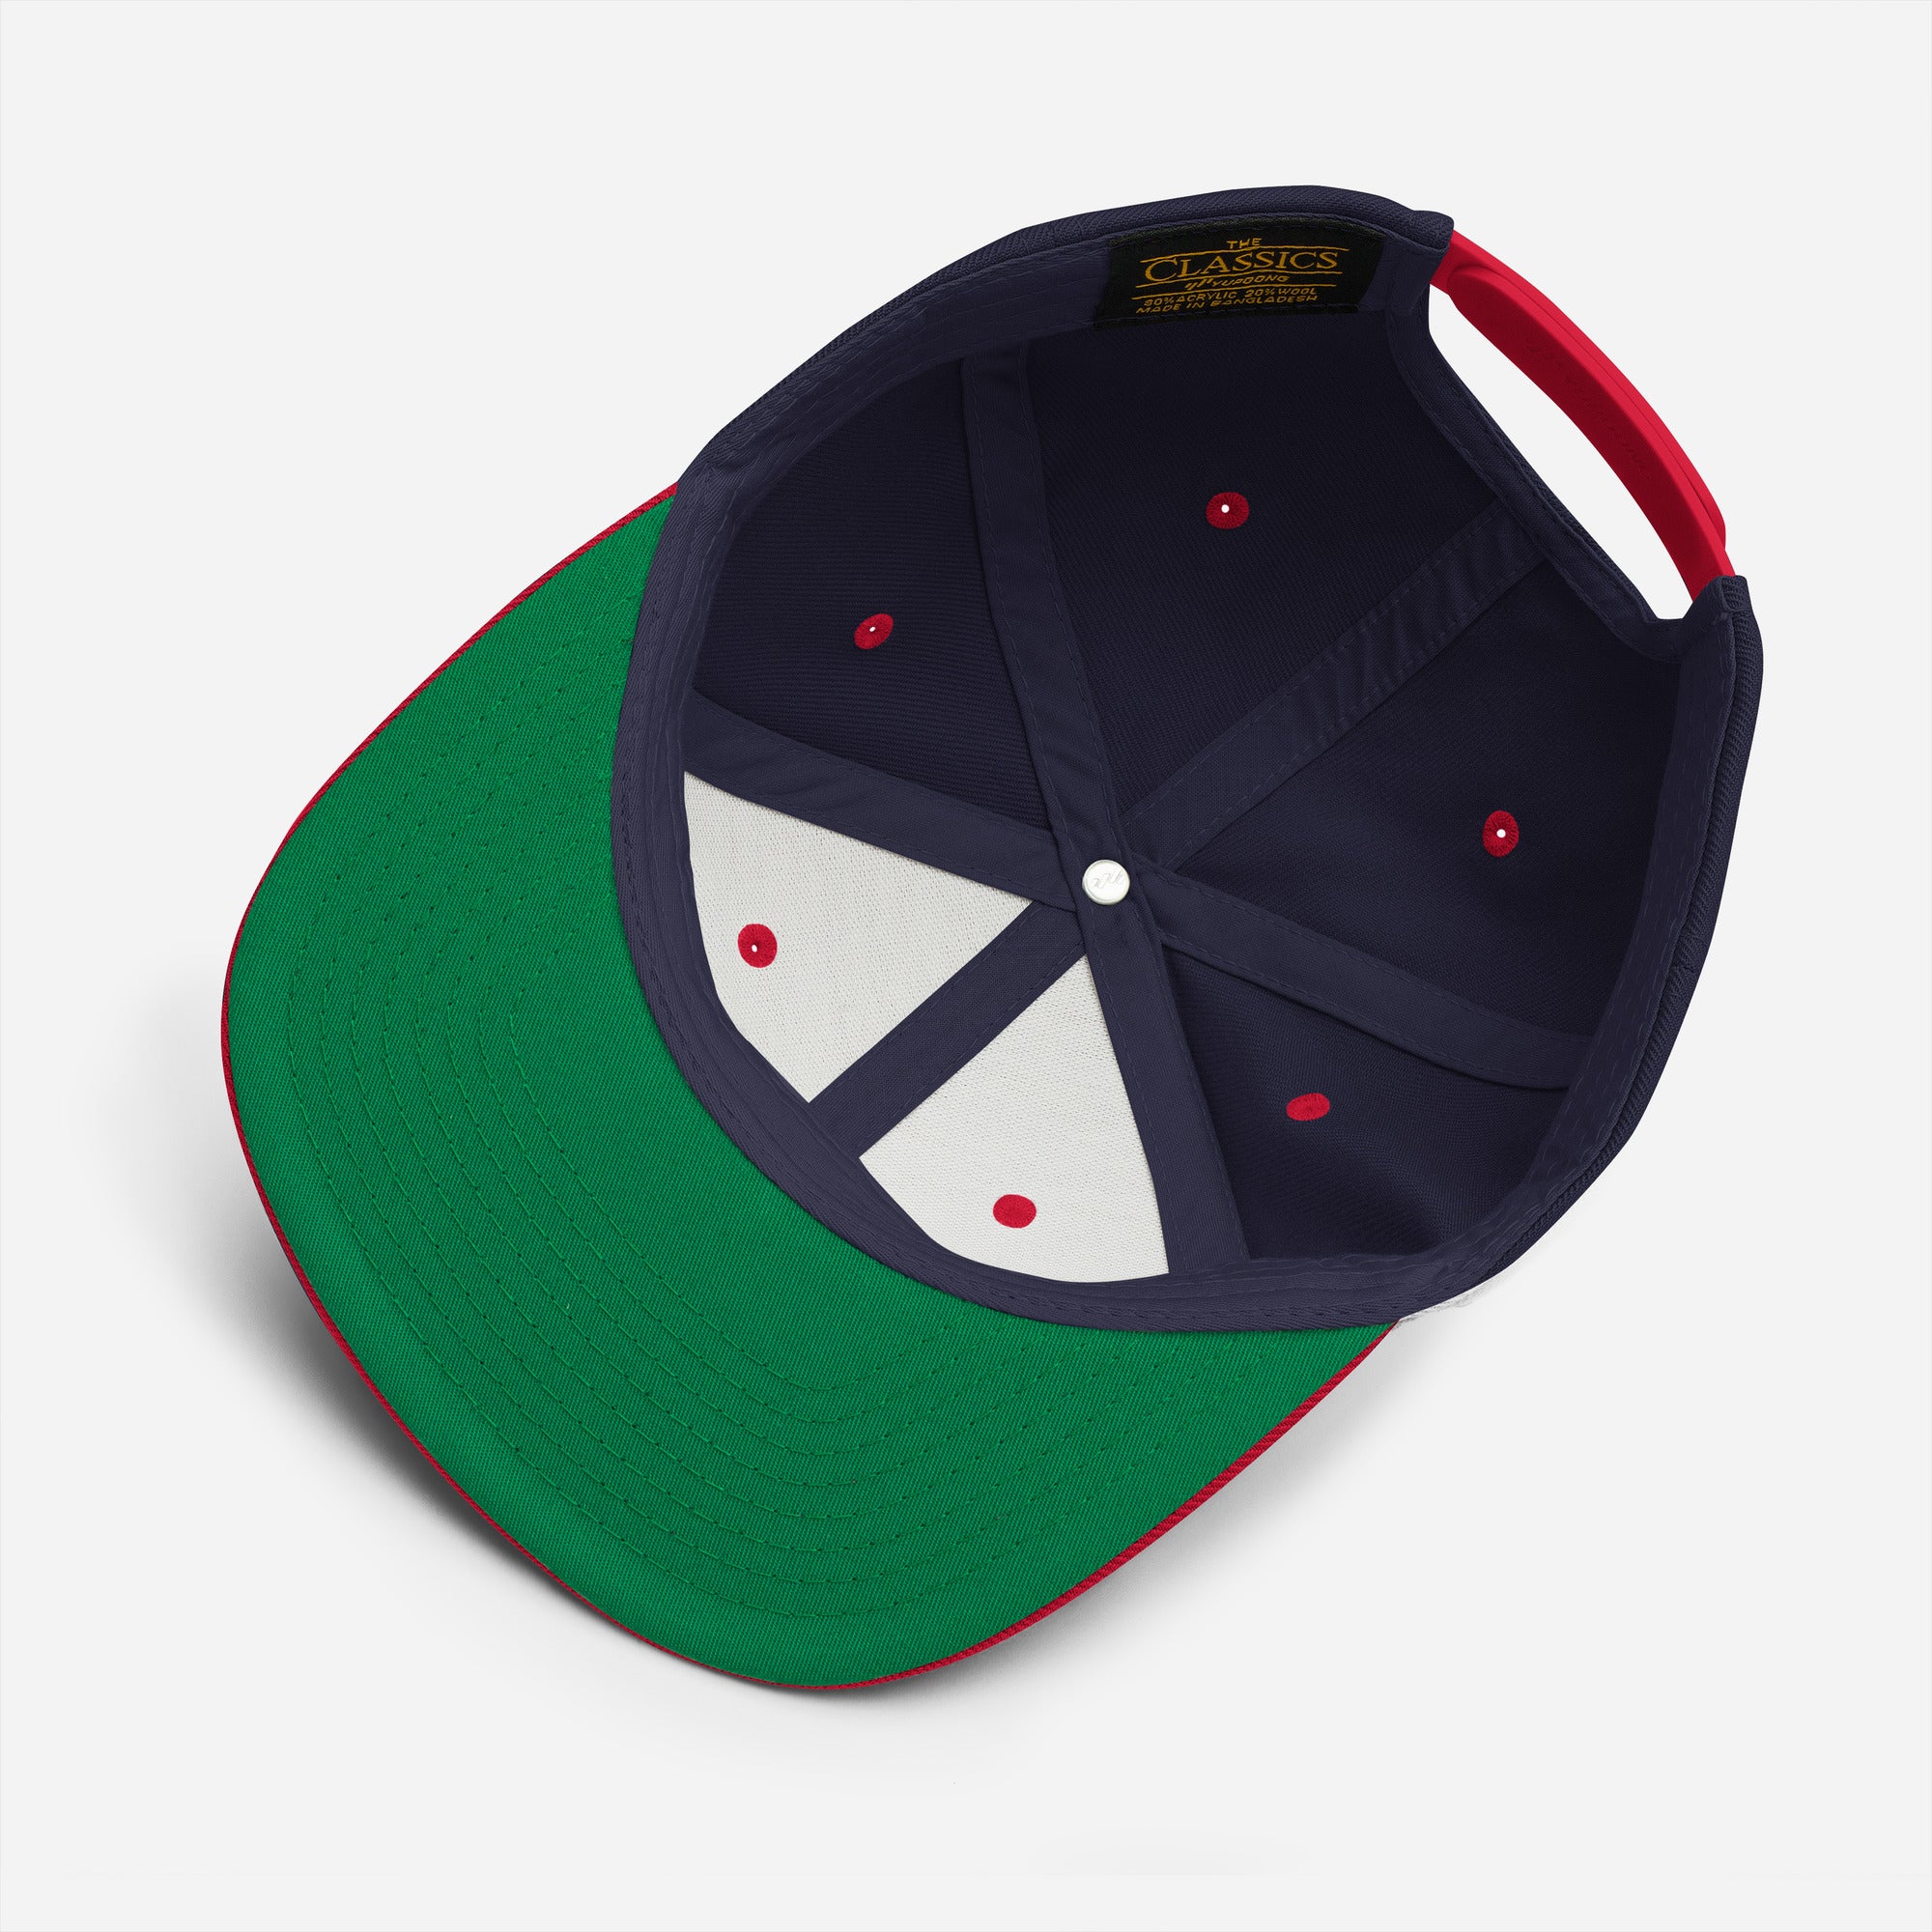 Jobu Cleveland Major League Snapback Hat